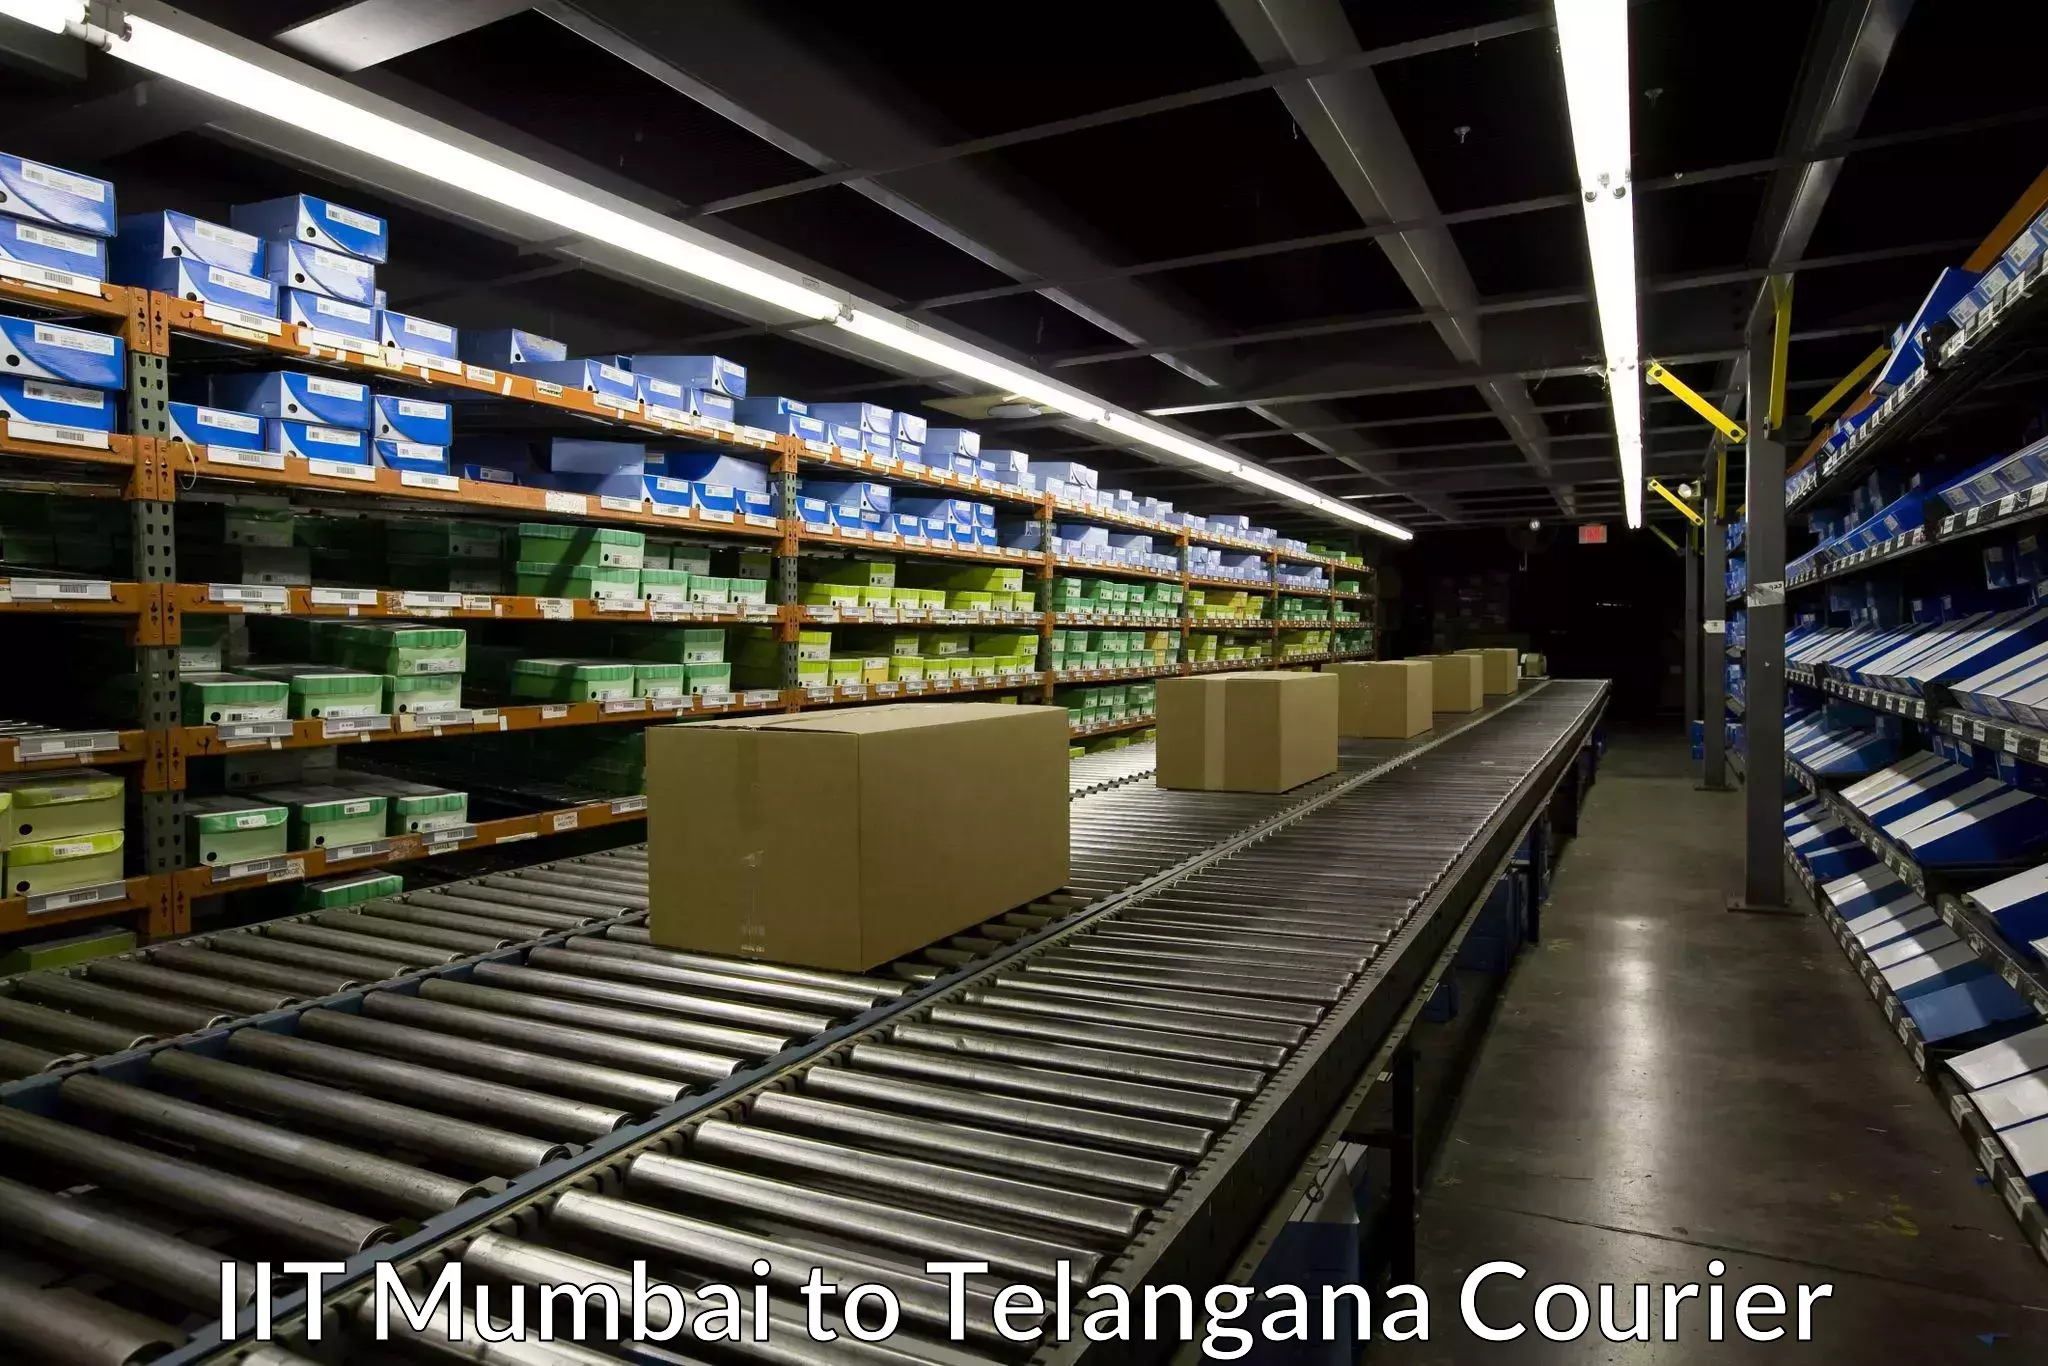 Cash on delivery service IIT Mumbai to Telangana